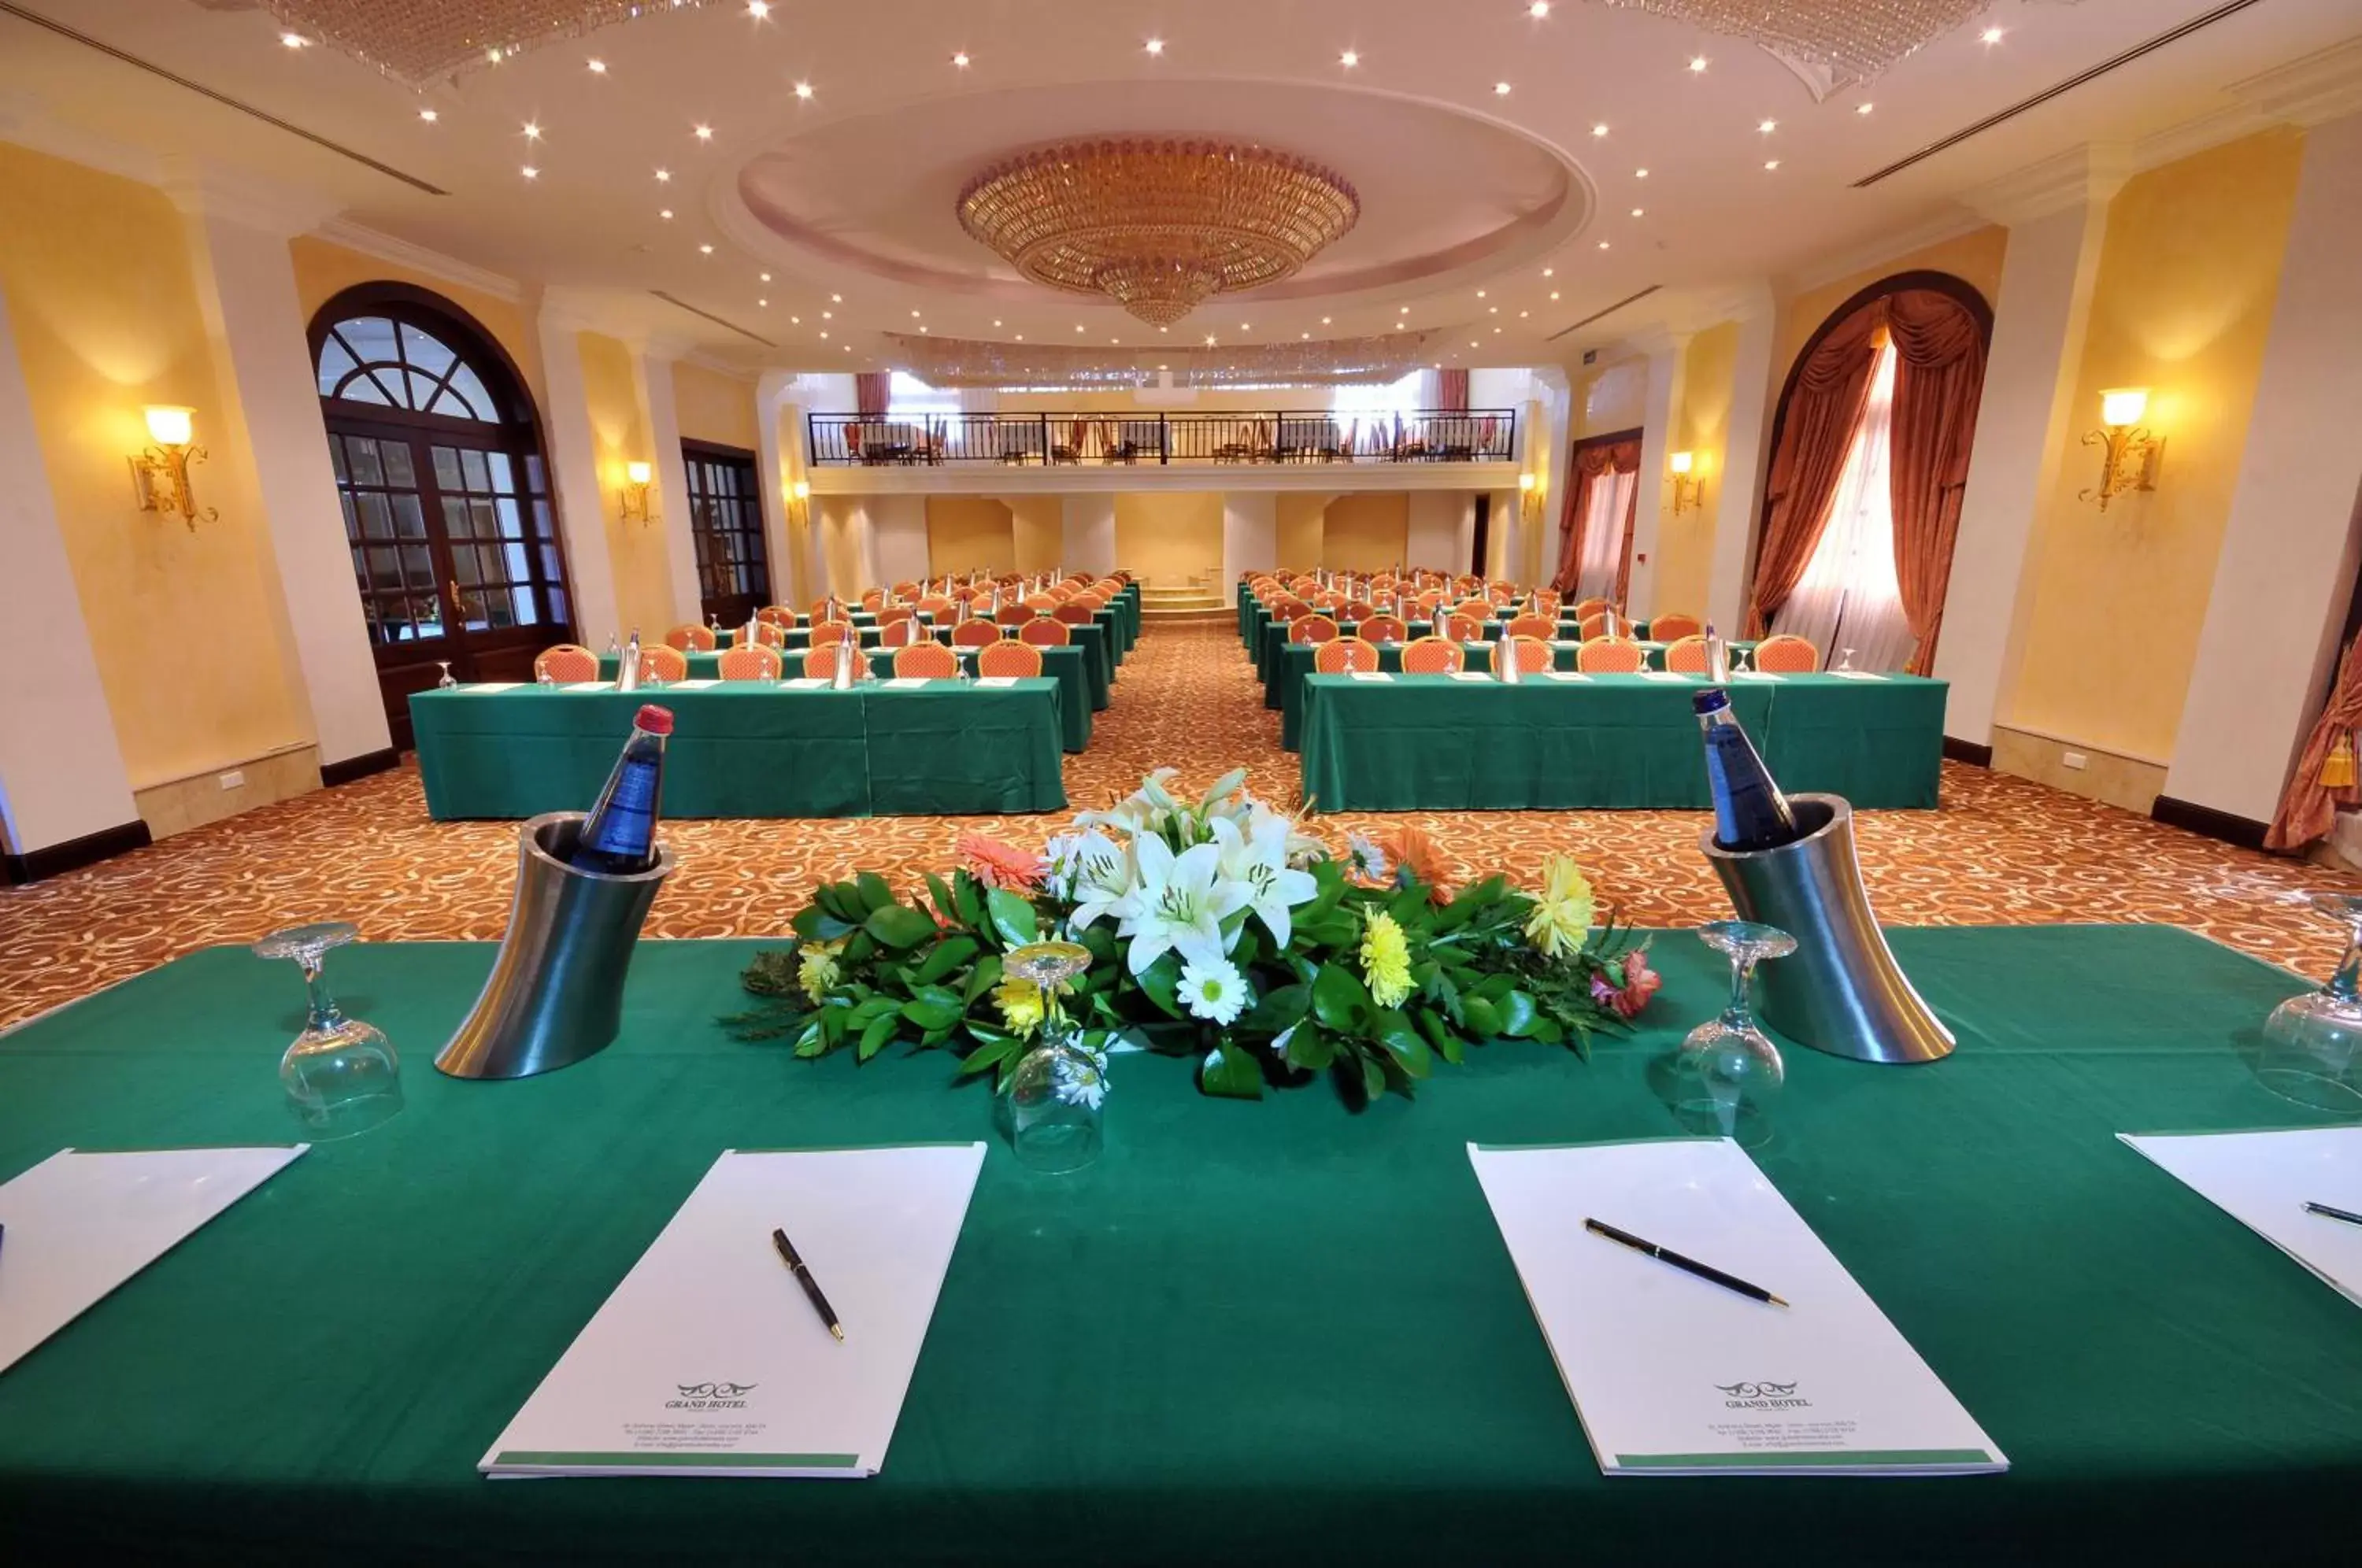 Banquet/Function facilities, Banquet Facilities in Grand Hotel Gozo